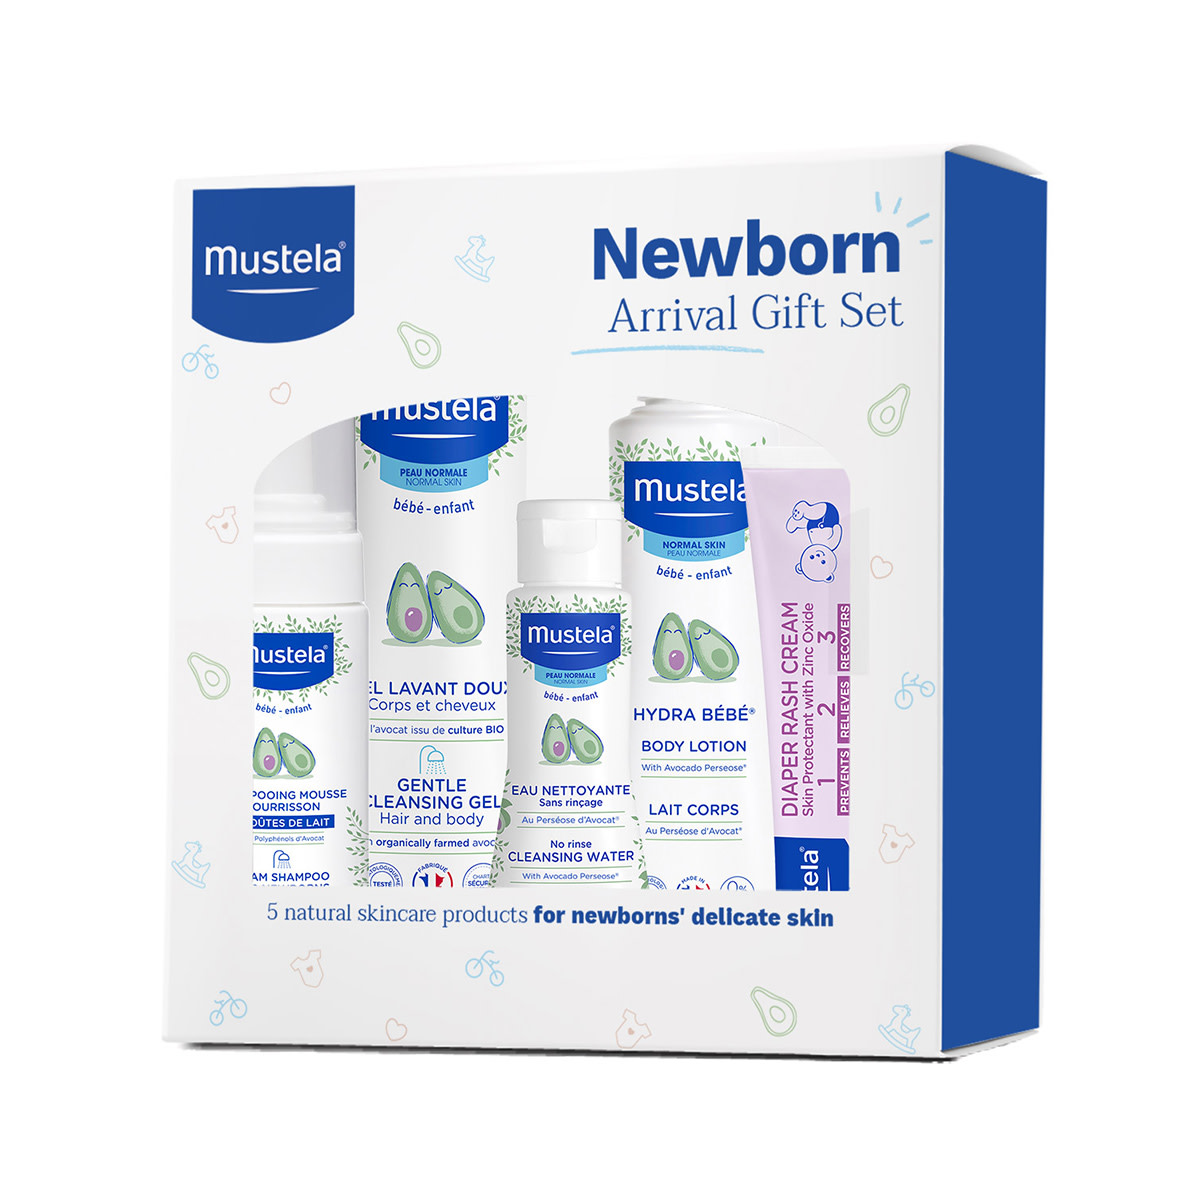 Mustela Newborn Arrival Gift Set.